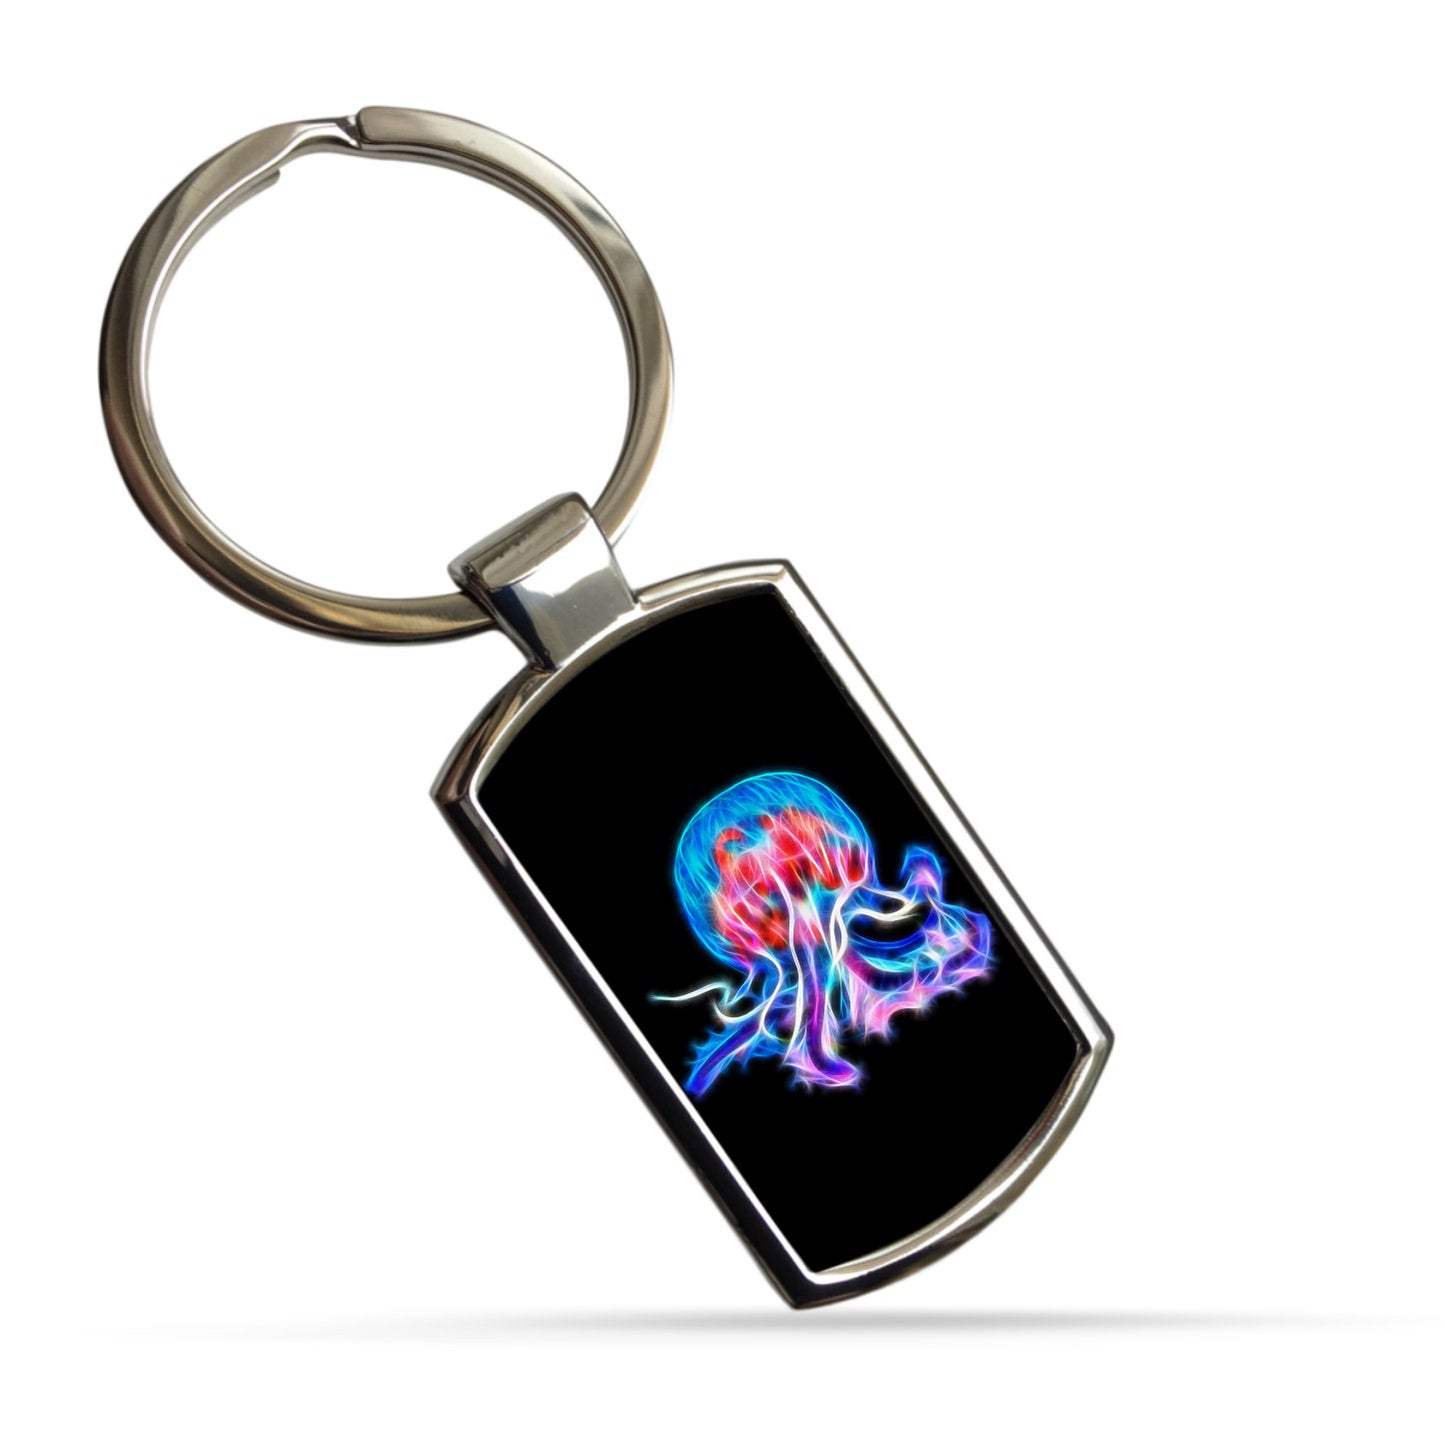 Marine Life Keychain. Designs include Dolphin, Jellyfish, Mandarin Dragonet, and Manatee